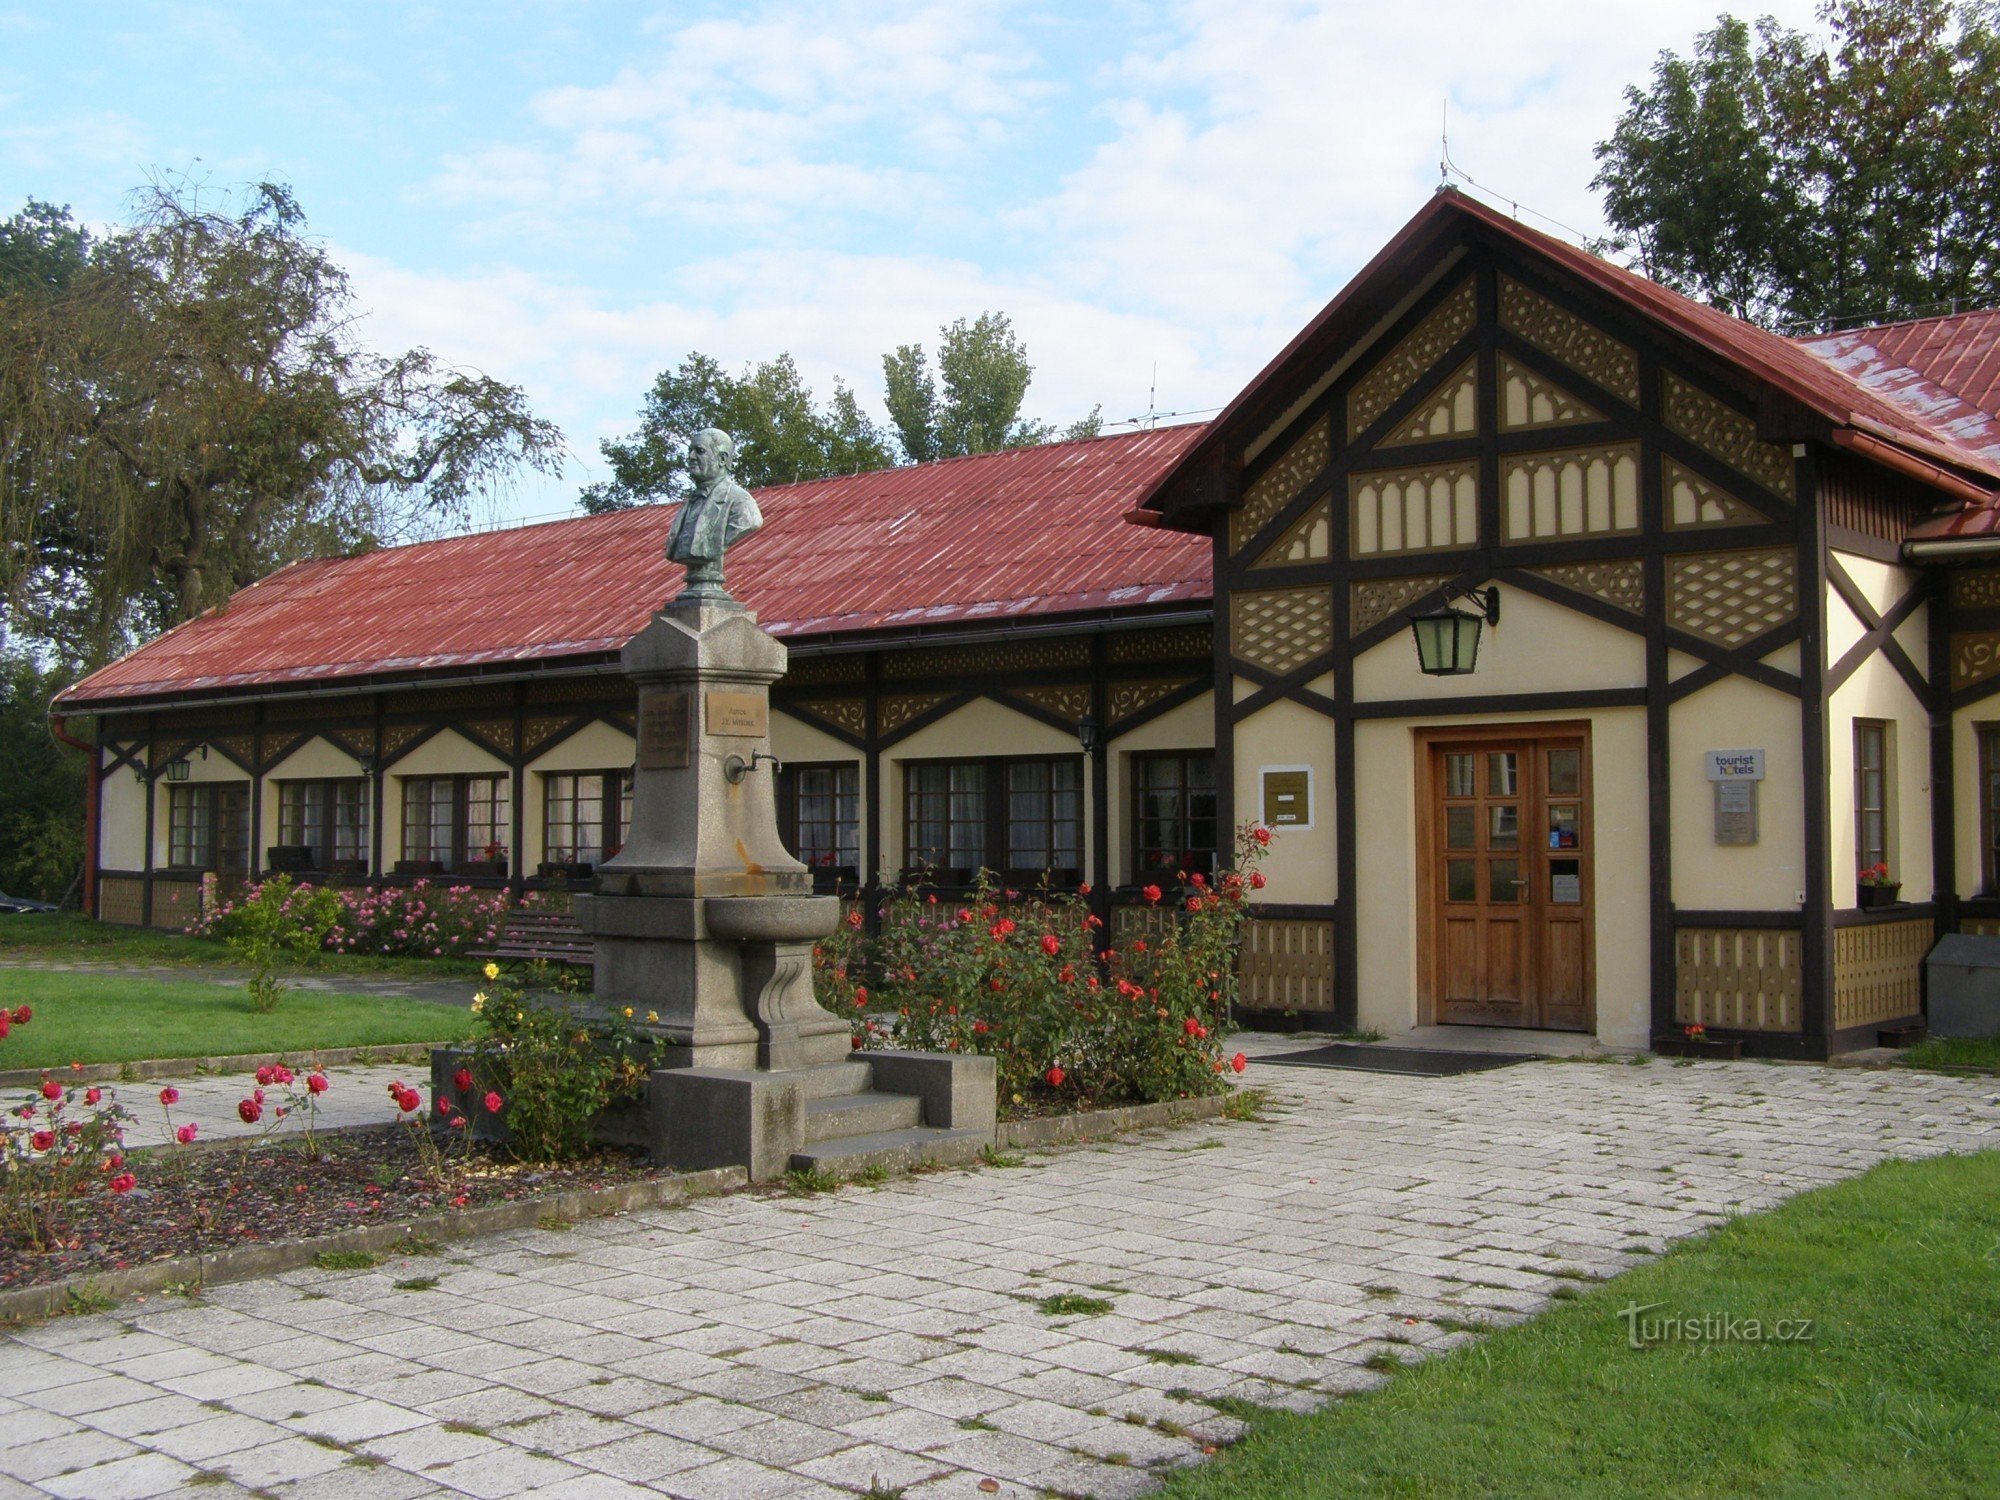 Sedmihorky - Mudr Spa の創設者の記念碑。 貴族